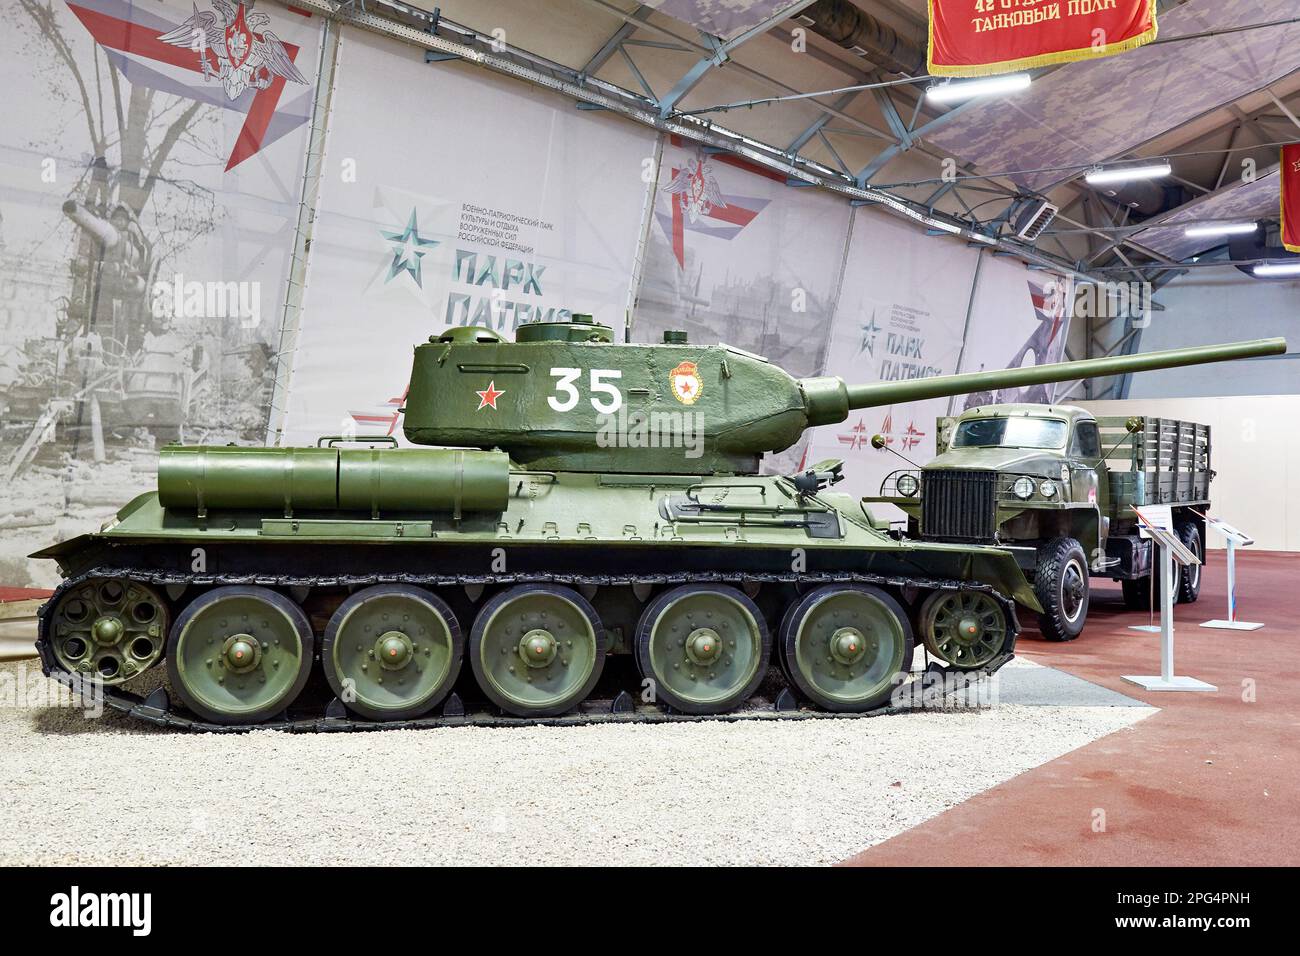 PARK PATRIOT, KUBINKA, MOSCOW REGION, RUSSIA - July 11, 2017: Soviet medium tank T-34-85 Stock Photo